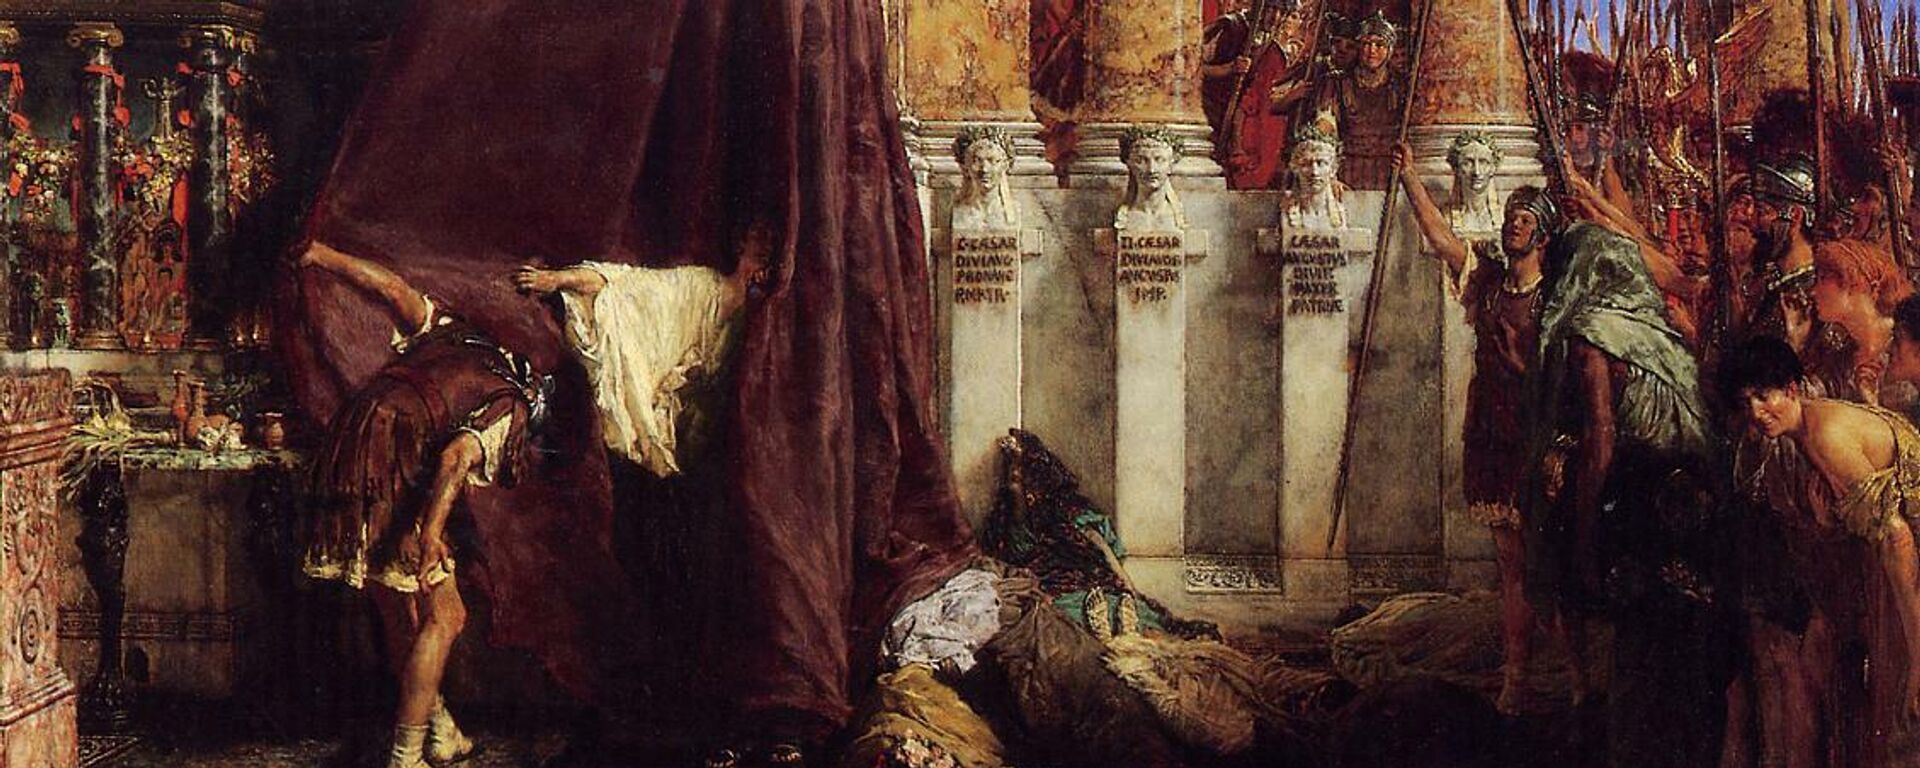 Pintura Ave, Caesar! Io, Saturnalia!, de Sir Lawrence Alma-Tadema.  - Sputnik Mundo, 1920, 24.12.2021